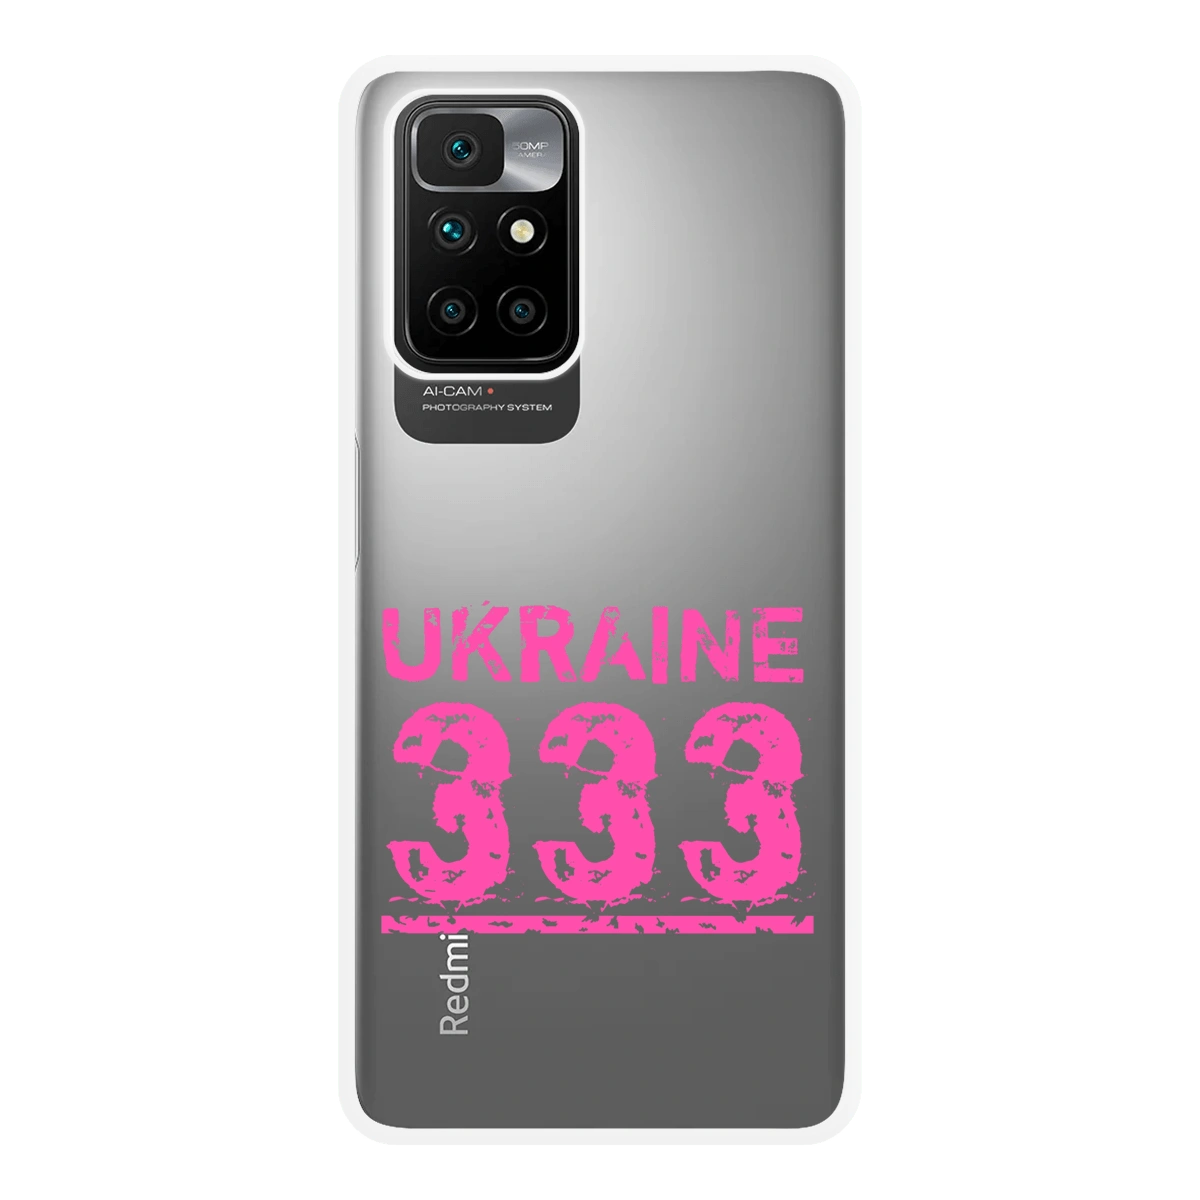 Україна 333